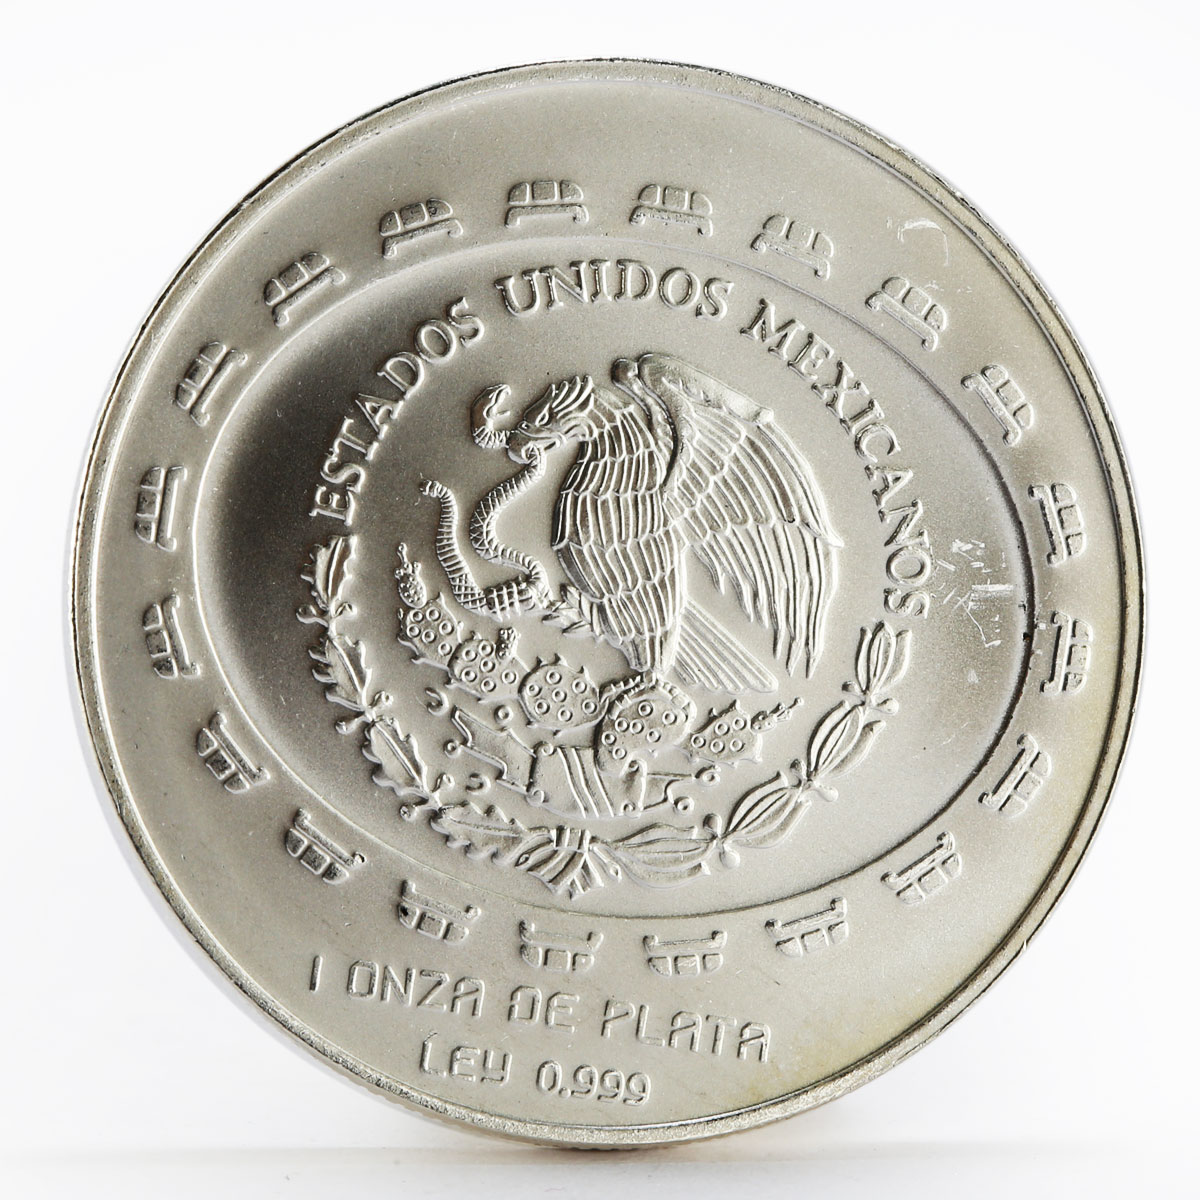 Mexico 5 pesos Disco De La Muerte silver coin 1998